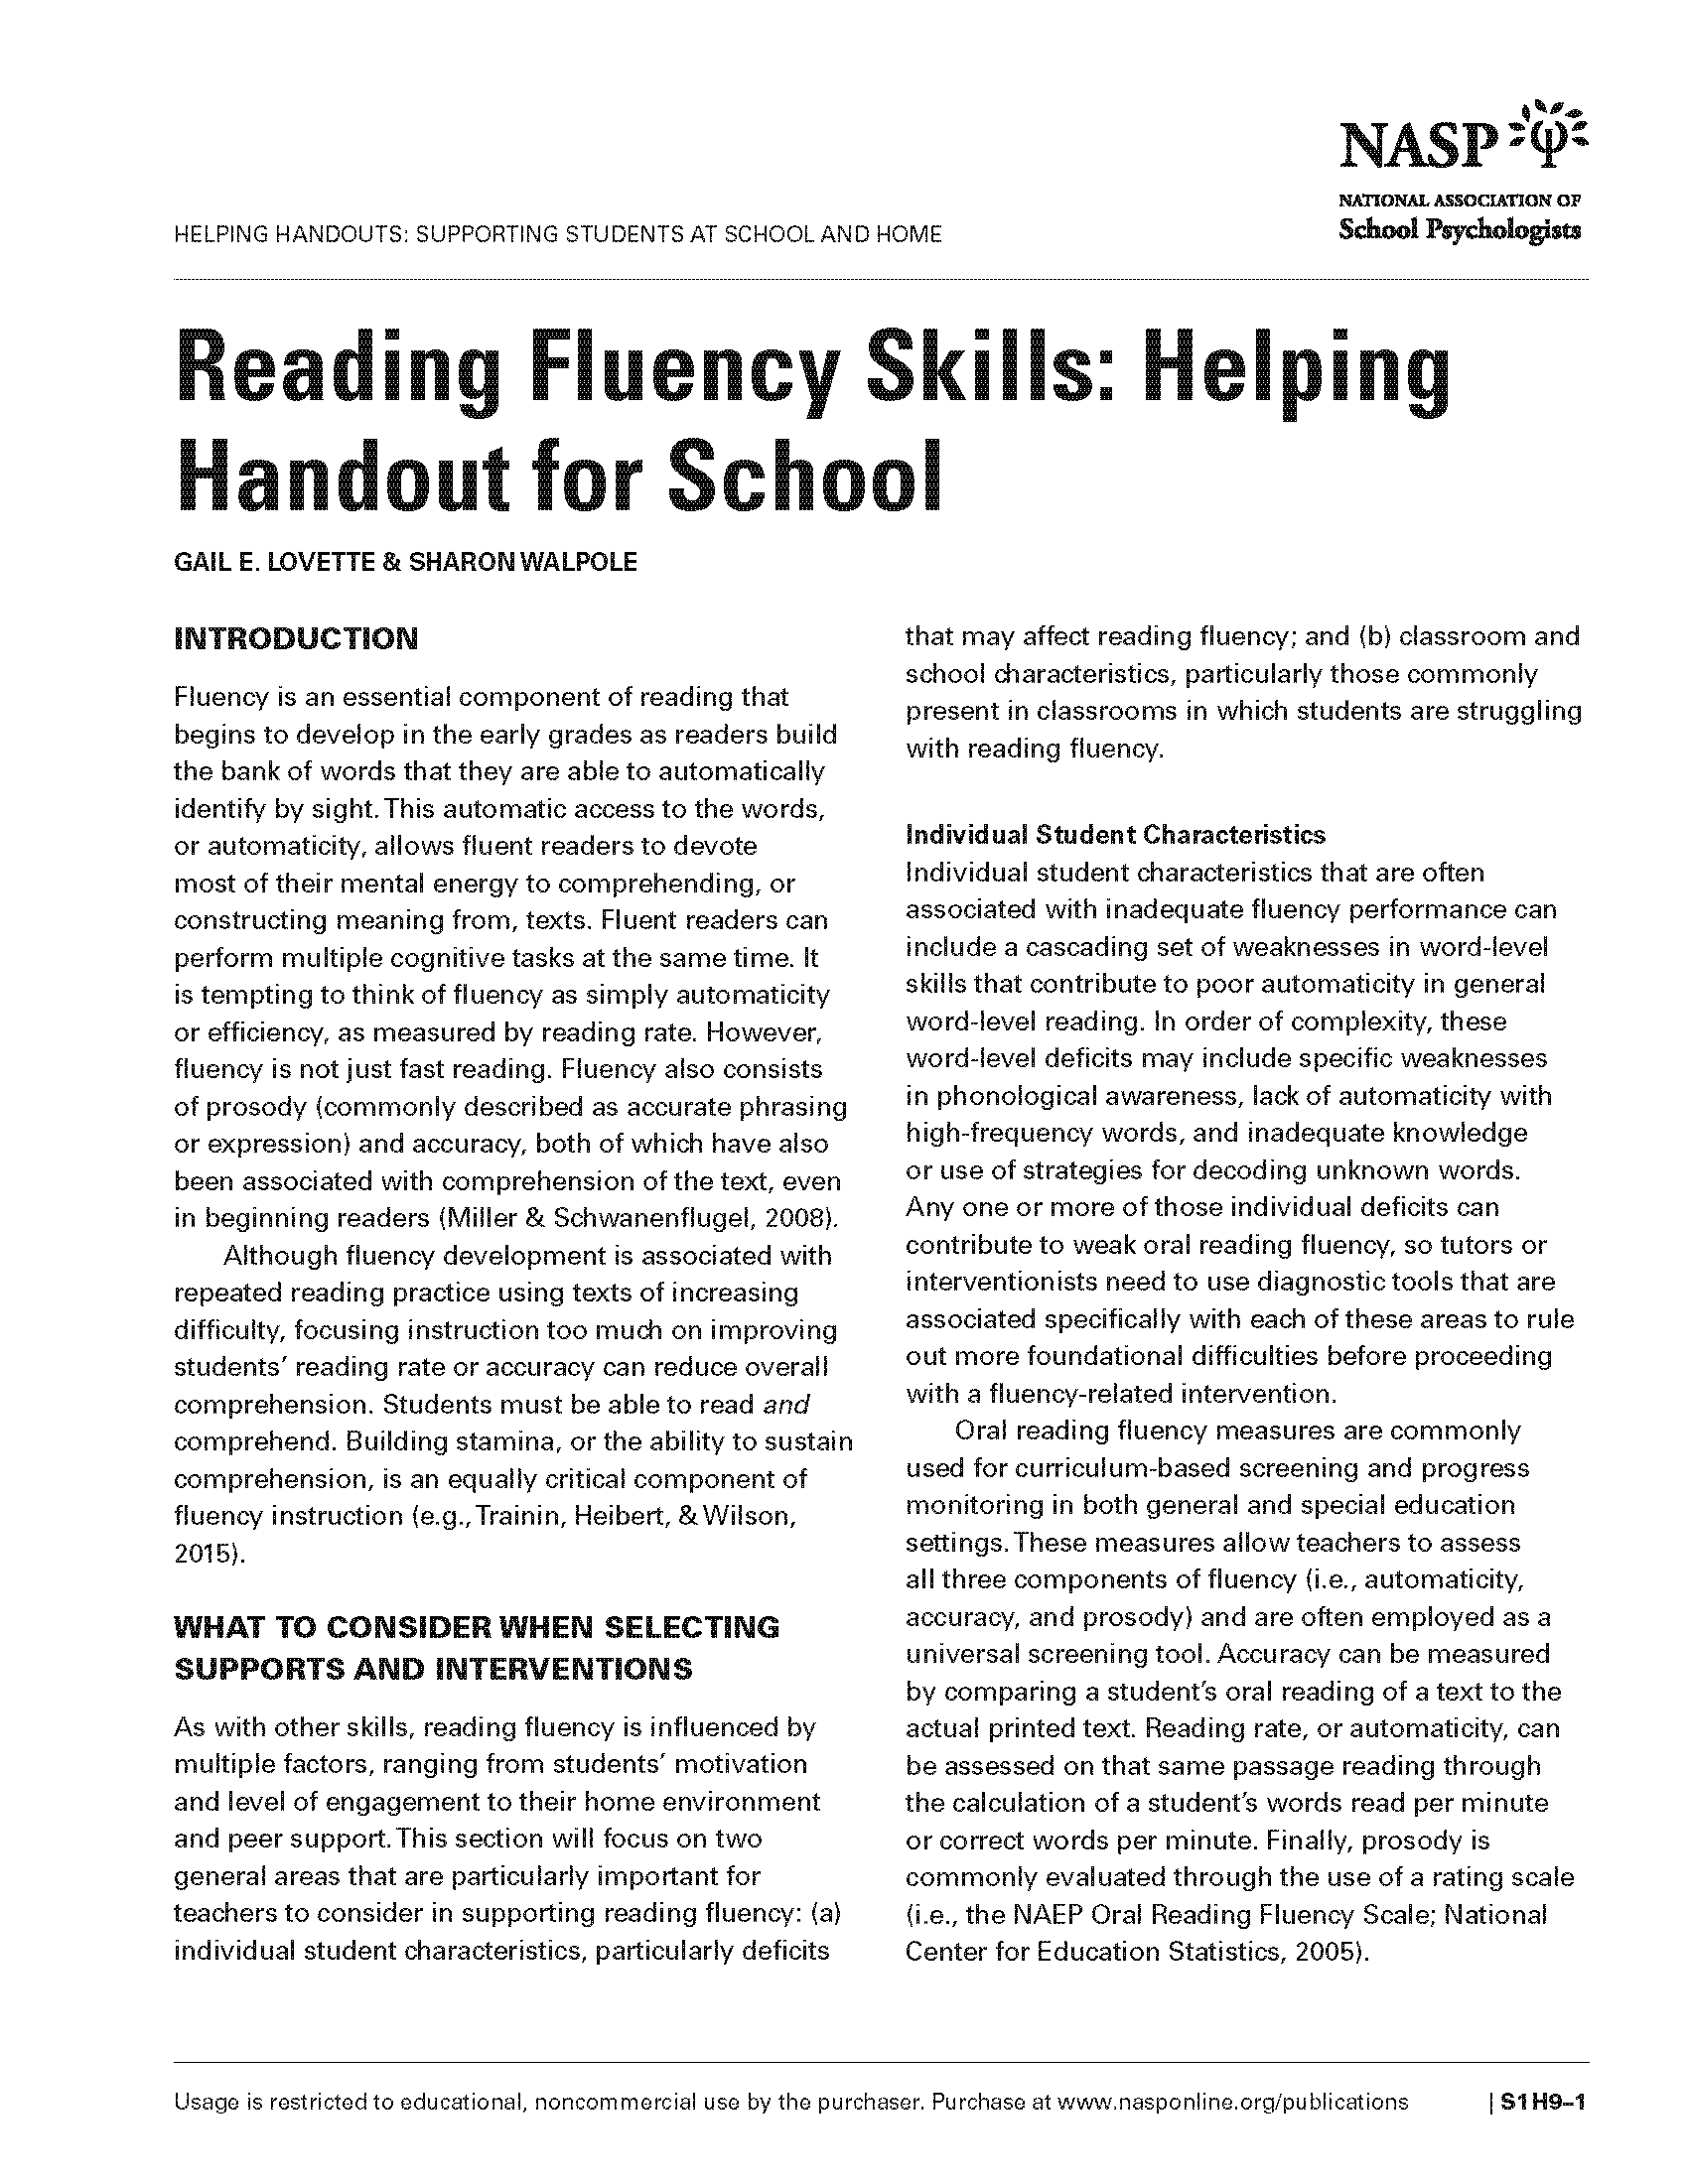 Reading Fluency Skills: Helping Handout for School